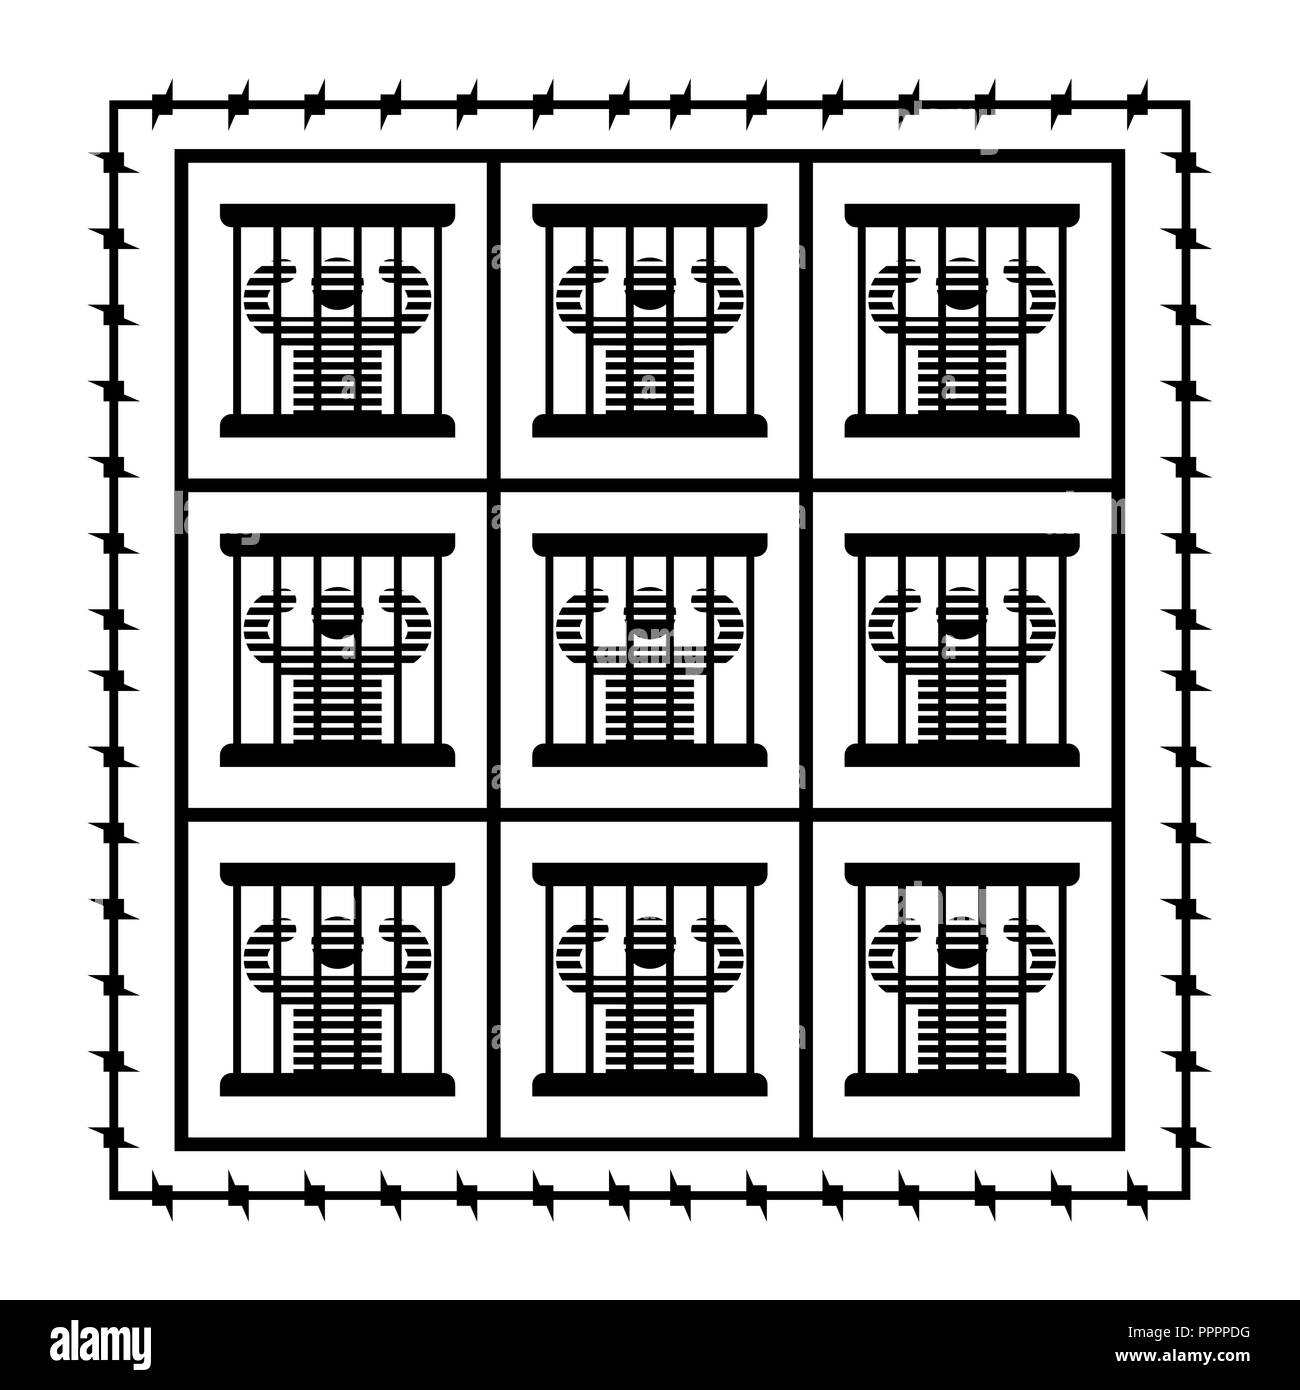 Jail symbol. Prisoner in prison. Perpetrator and bars on windows. Barbed wire around perimeter Stock Vector